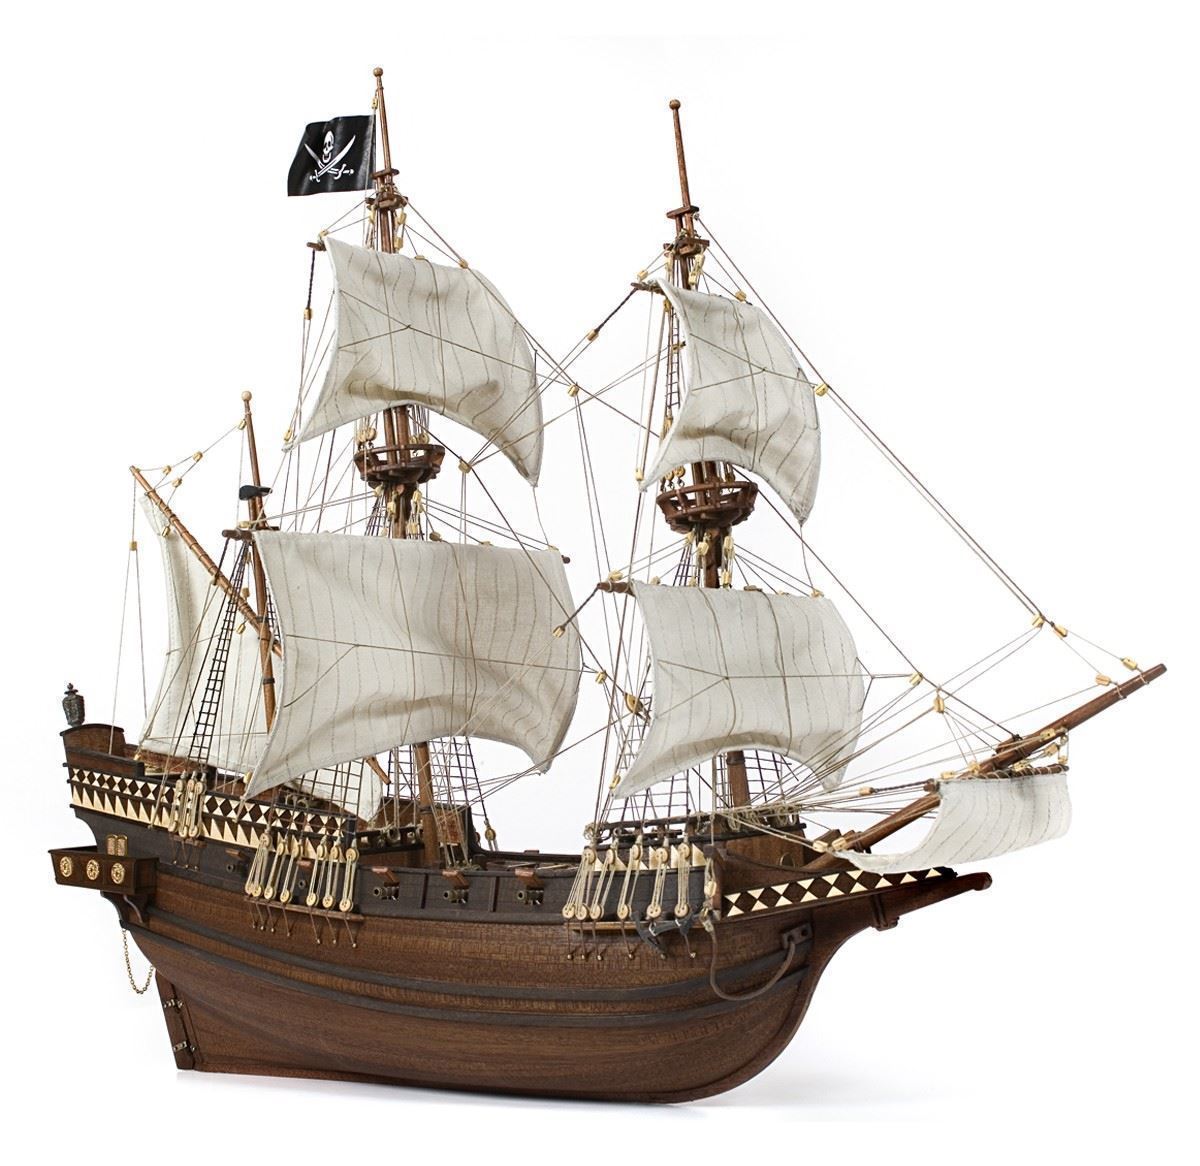 Maqueta barco de madera: BUCCANEER (0CCRE 12002)